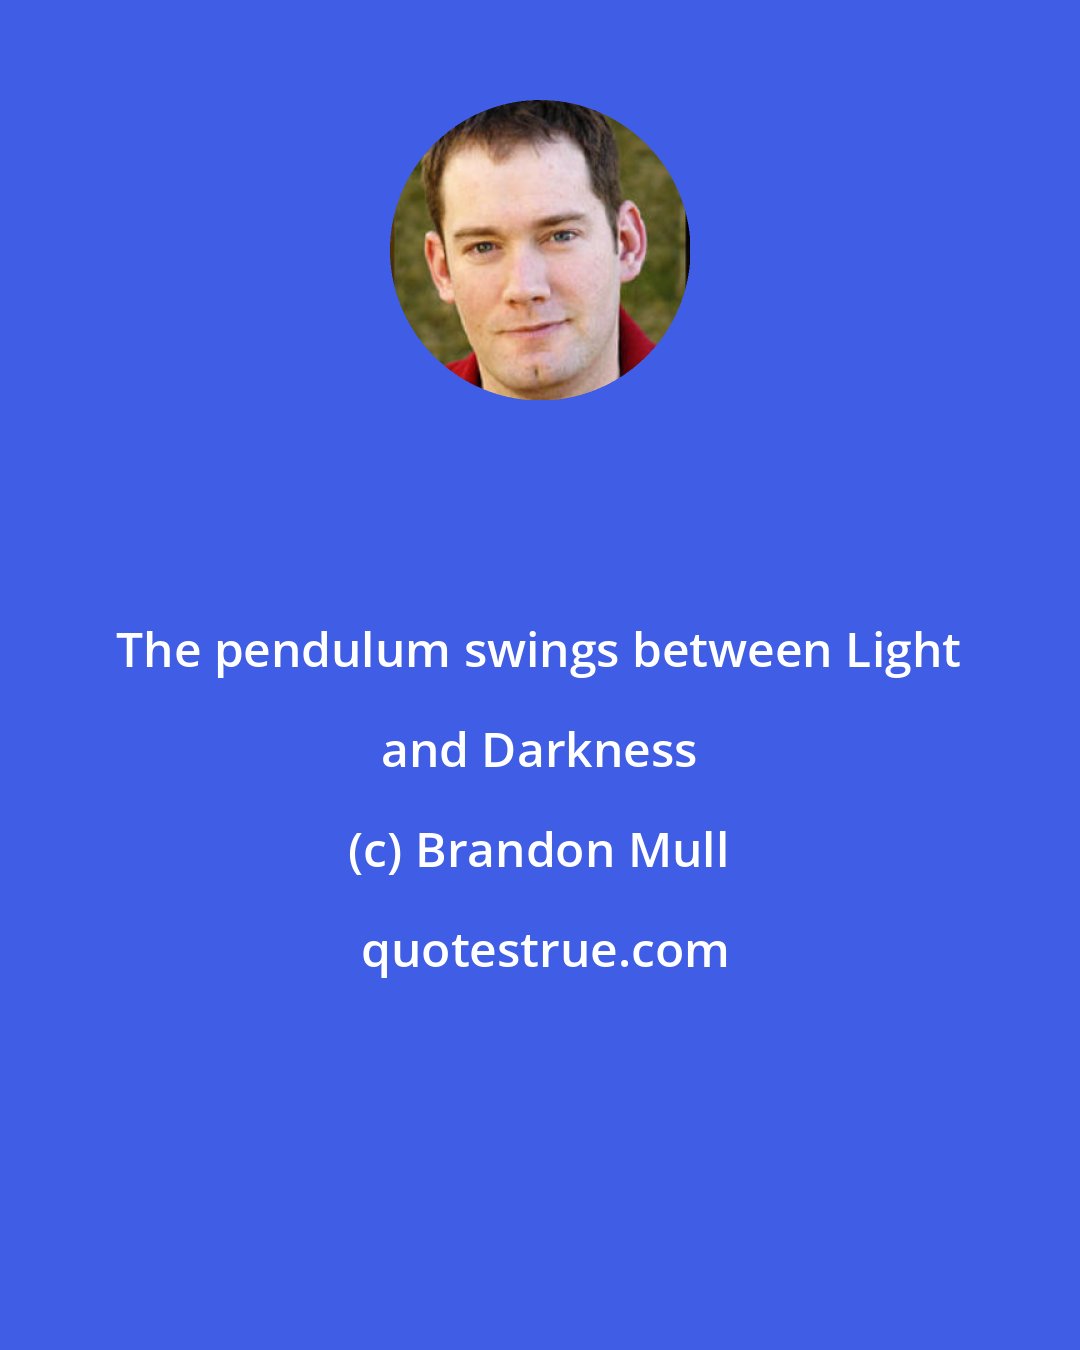 Brandon Mull: The pendulum swings between Light and Darkness